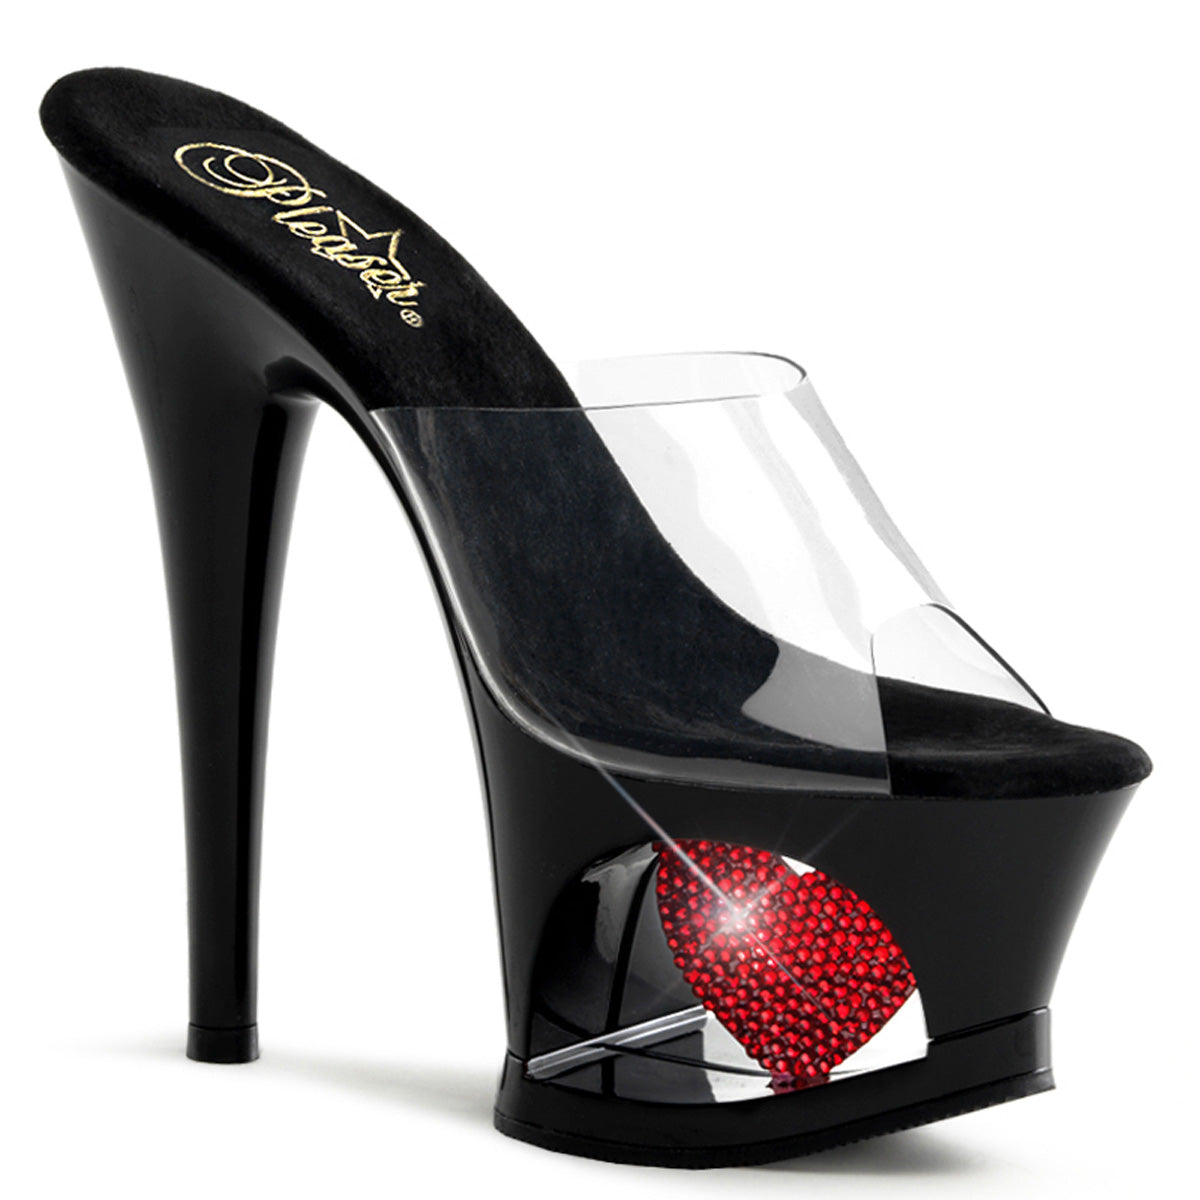 Luna-701hrs 7 "Heel Clearblack con zapatos de baile de polo rojo